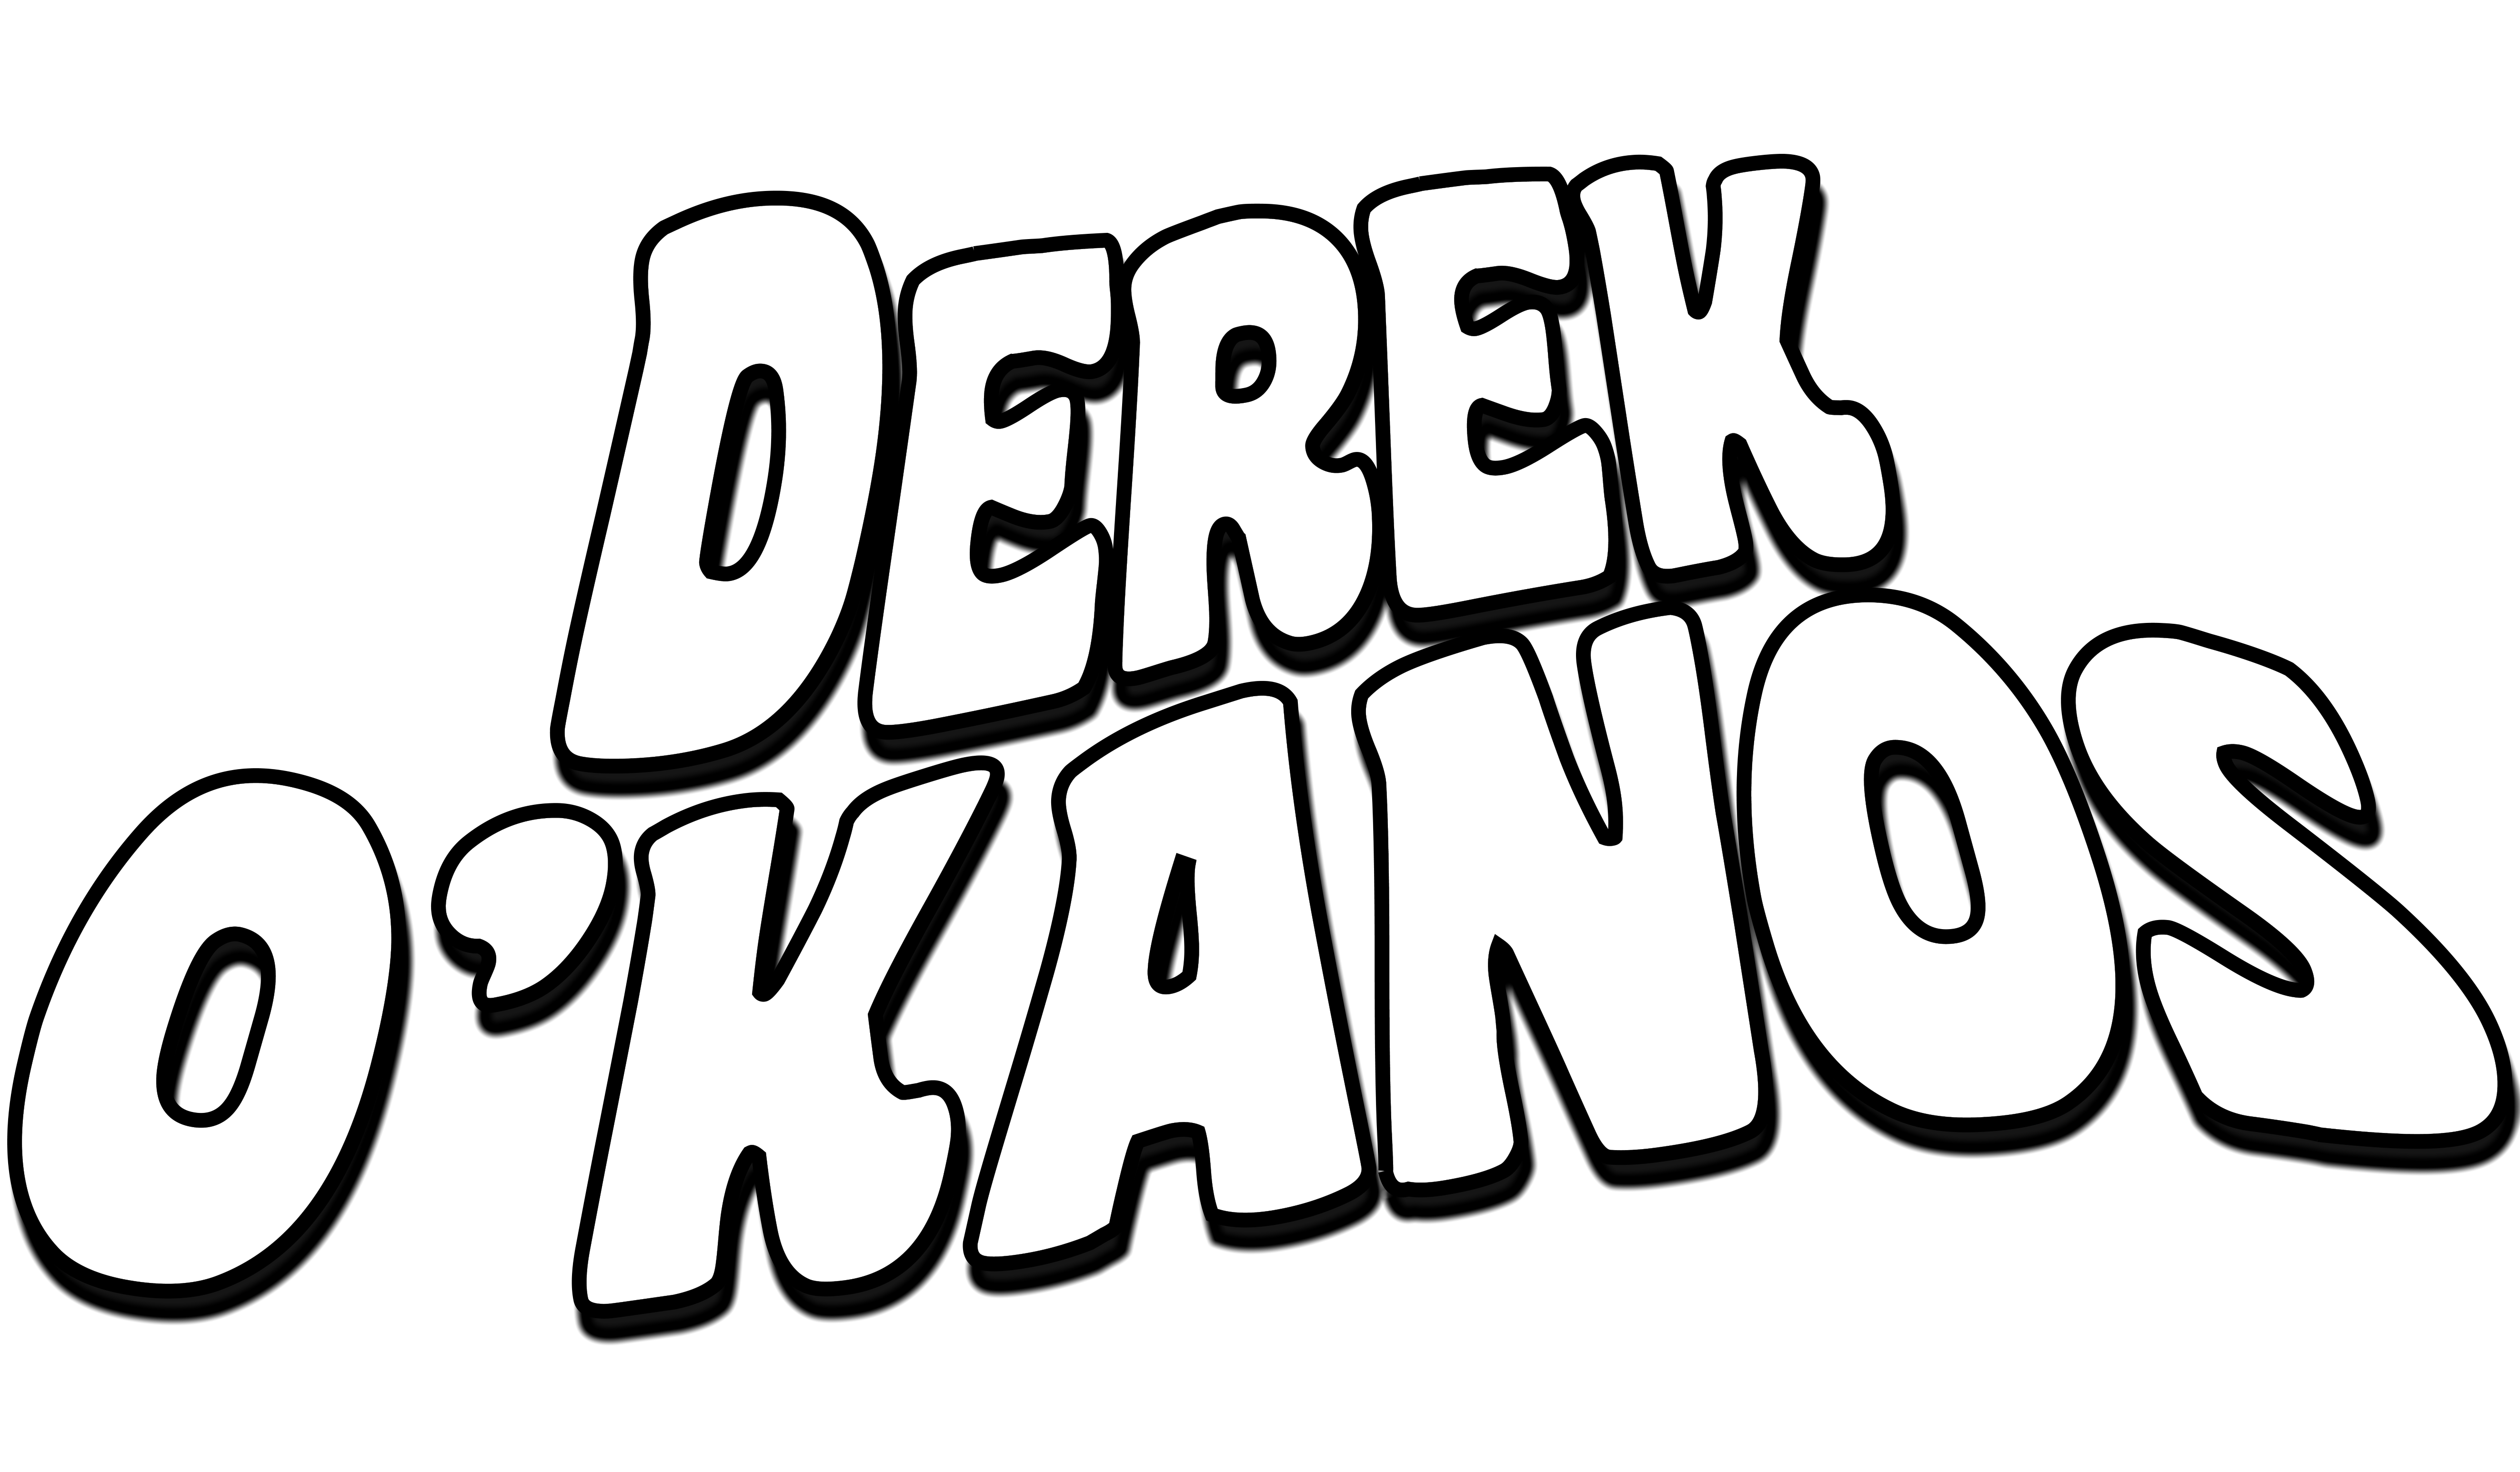 Derek O'Kanos